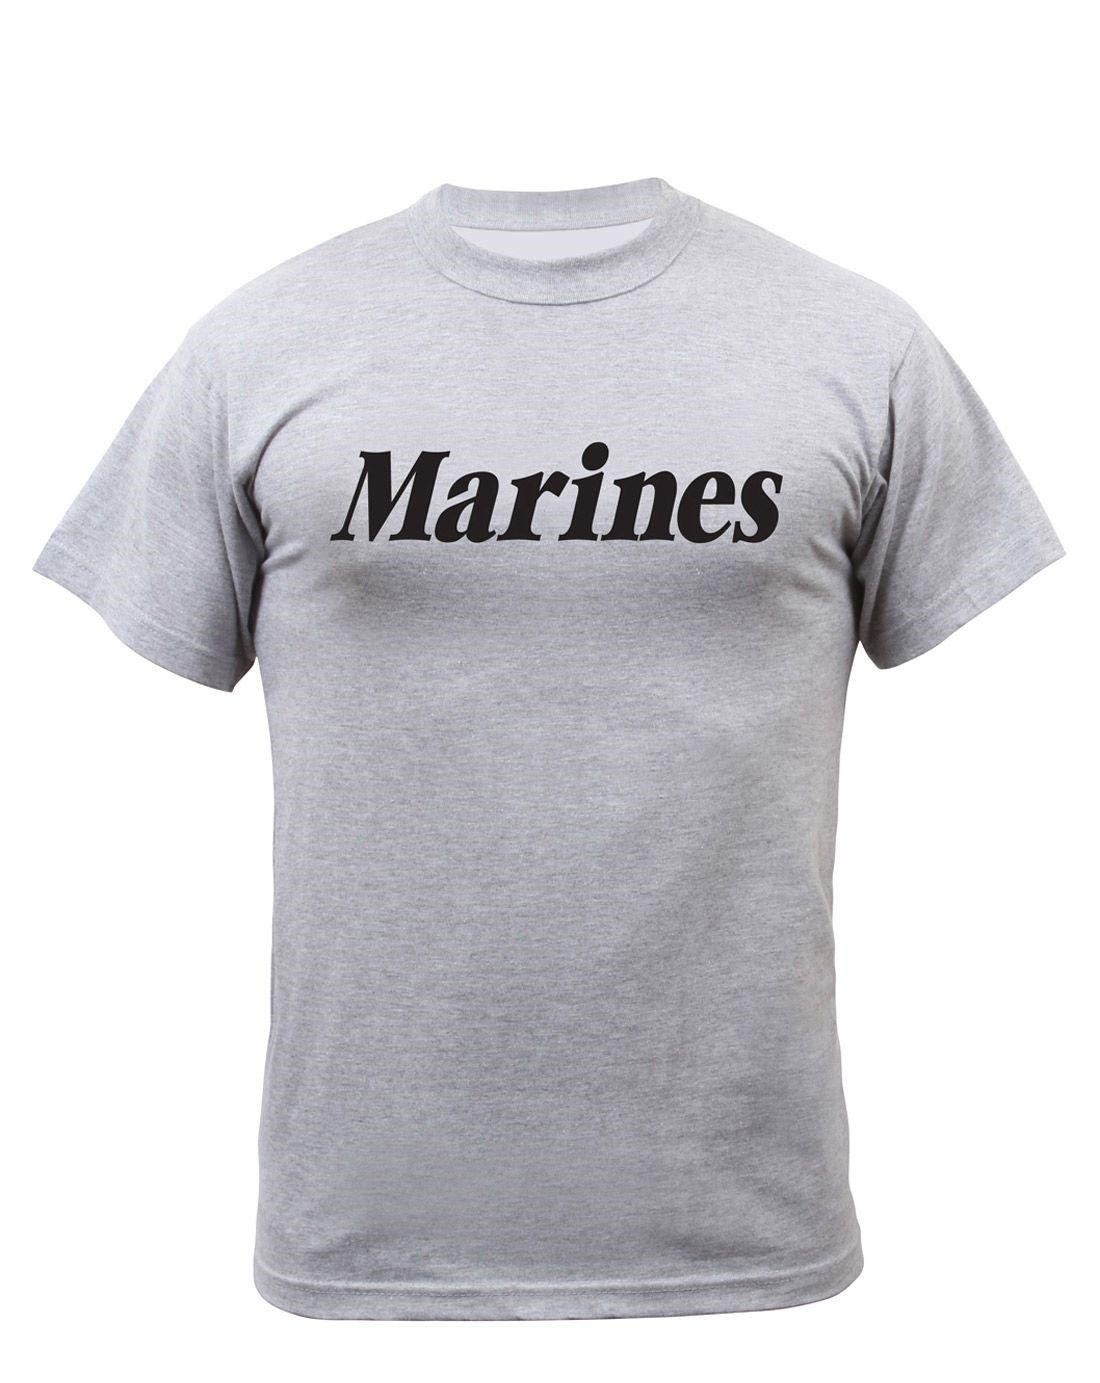 8: Rothco Physical Training T-shirt - 'ARMY' (Grå m. Marines, XL)